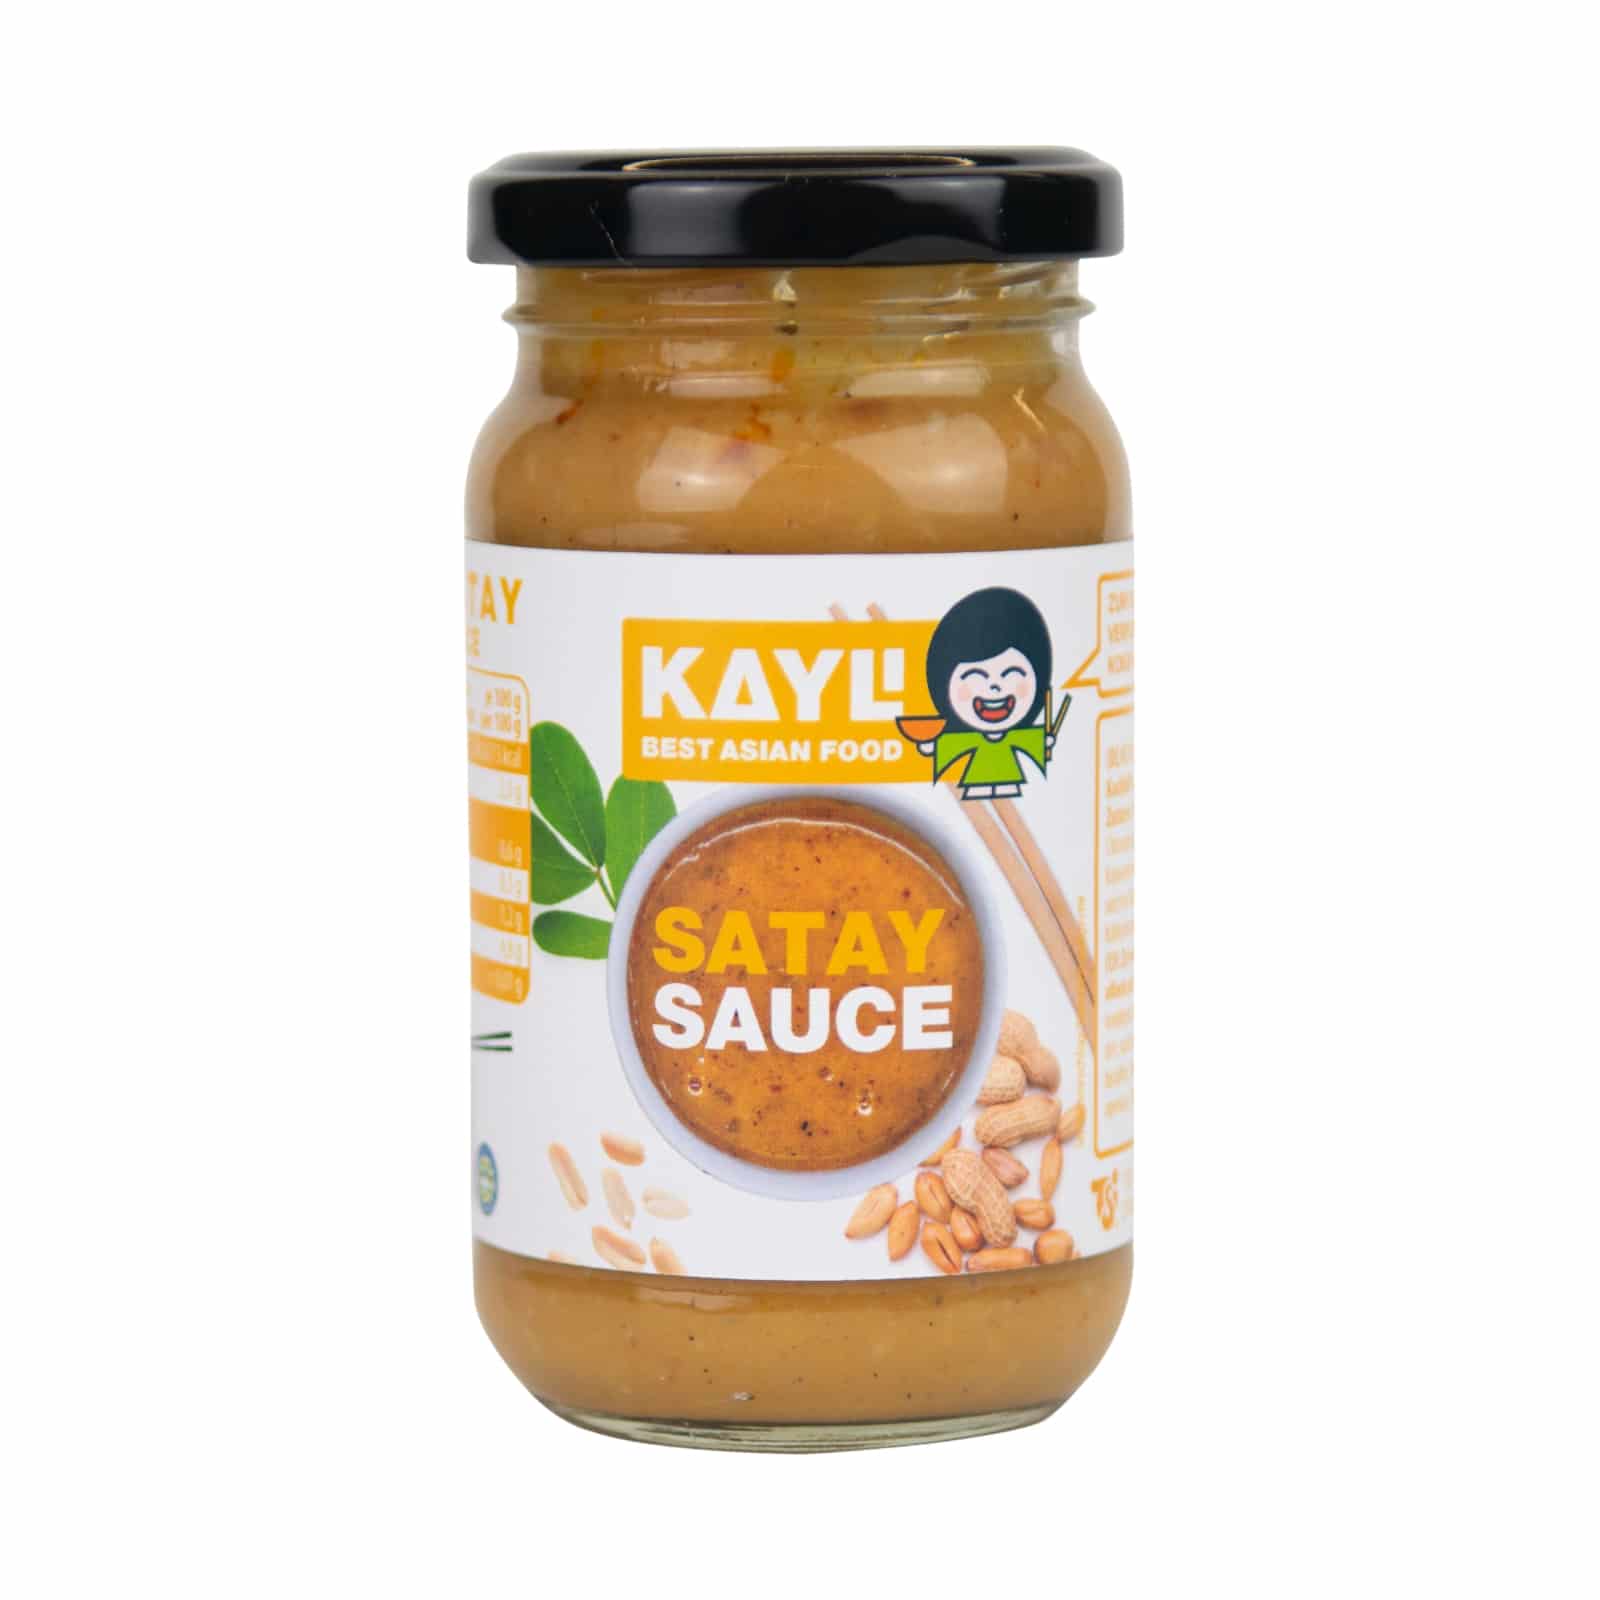 KAY LI Satay Sauce 200g